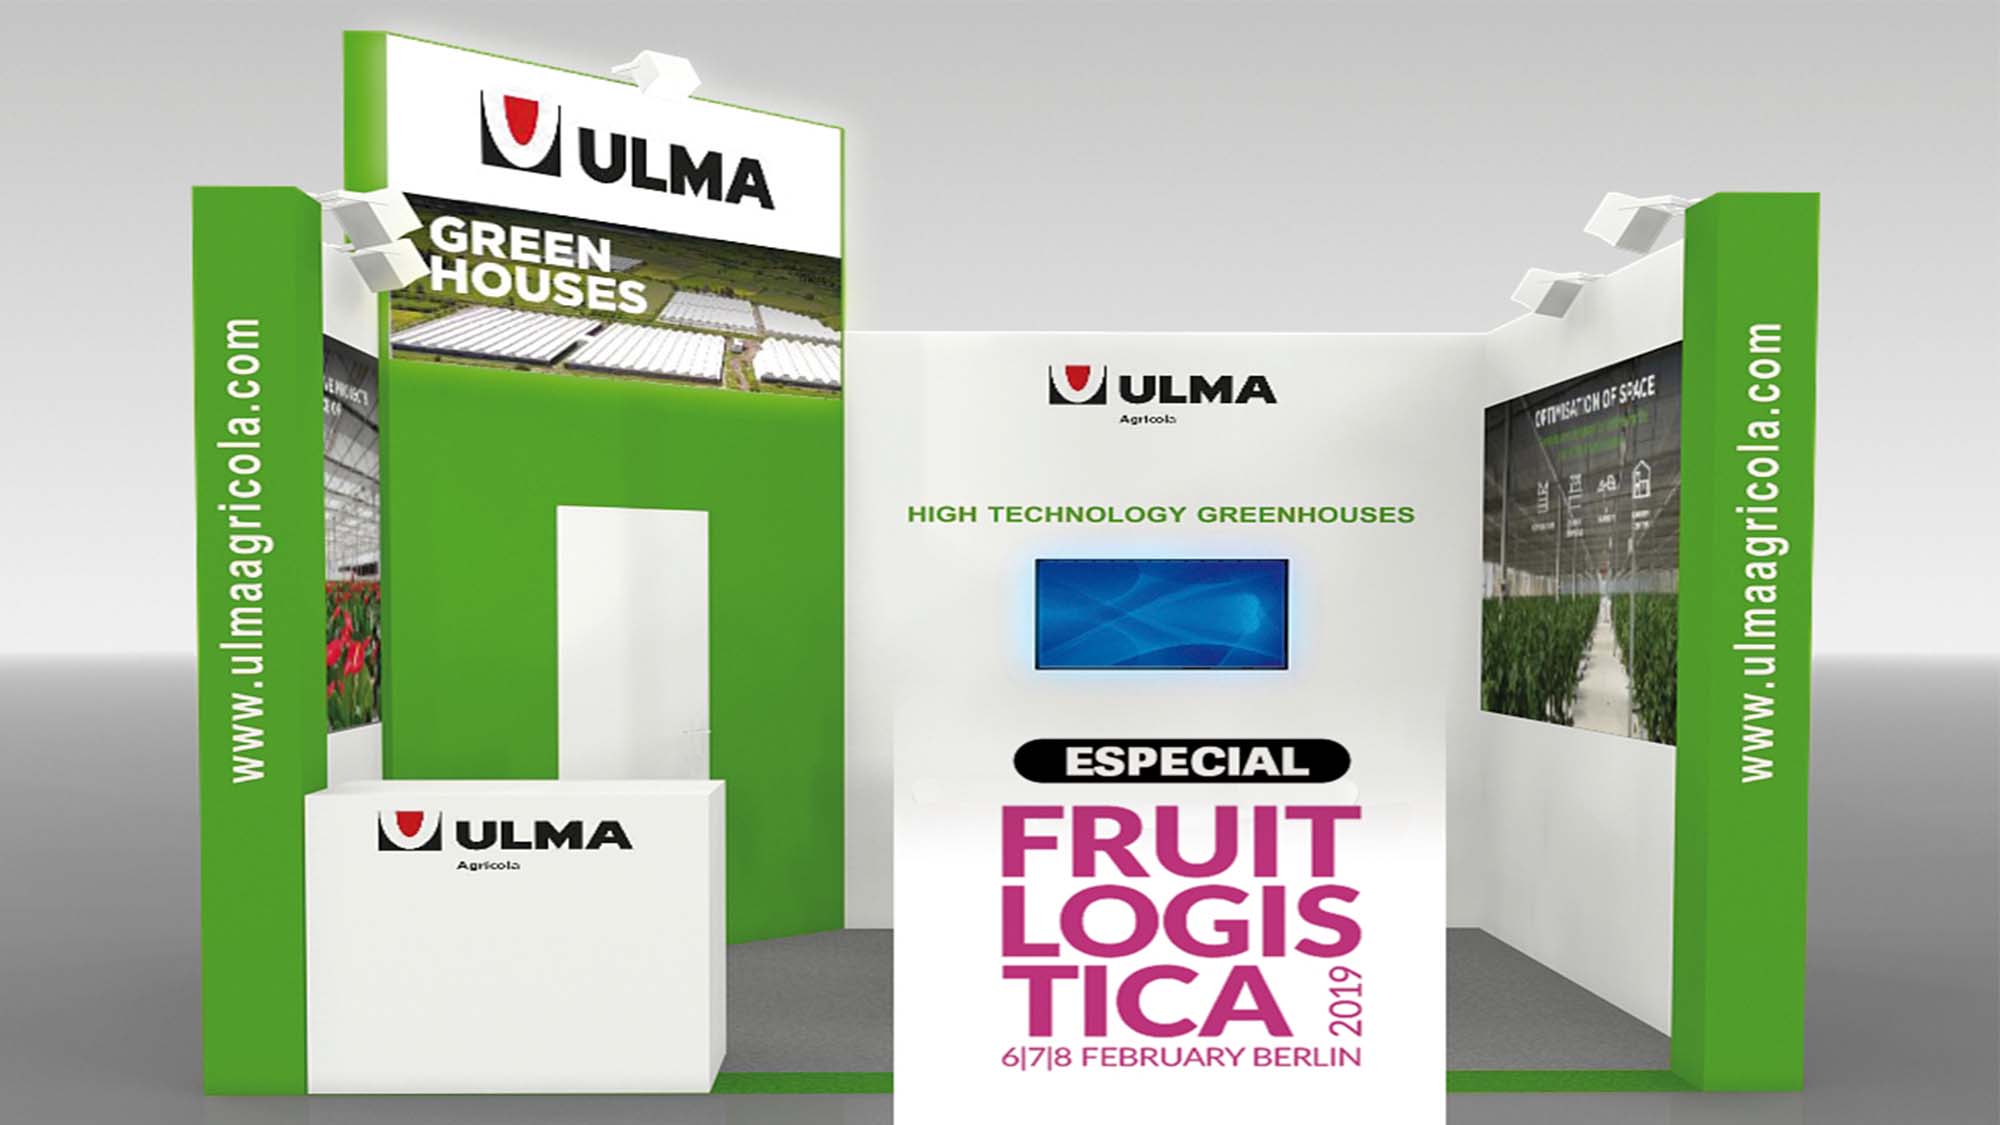 ULMA Agrícola at Fruit Logística 2019